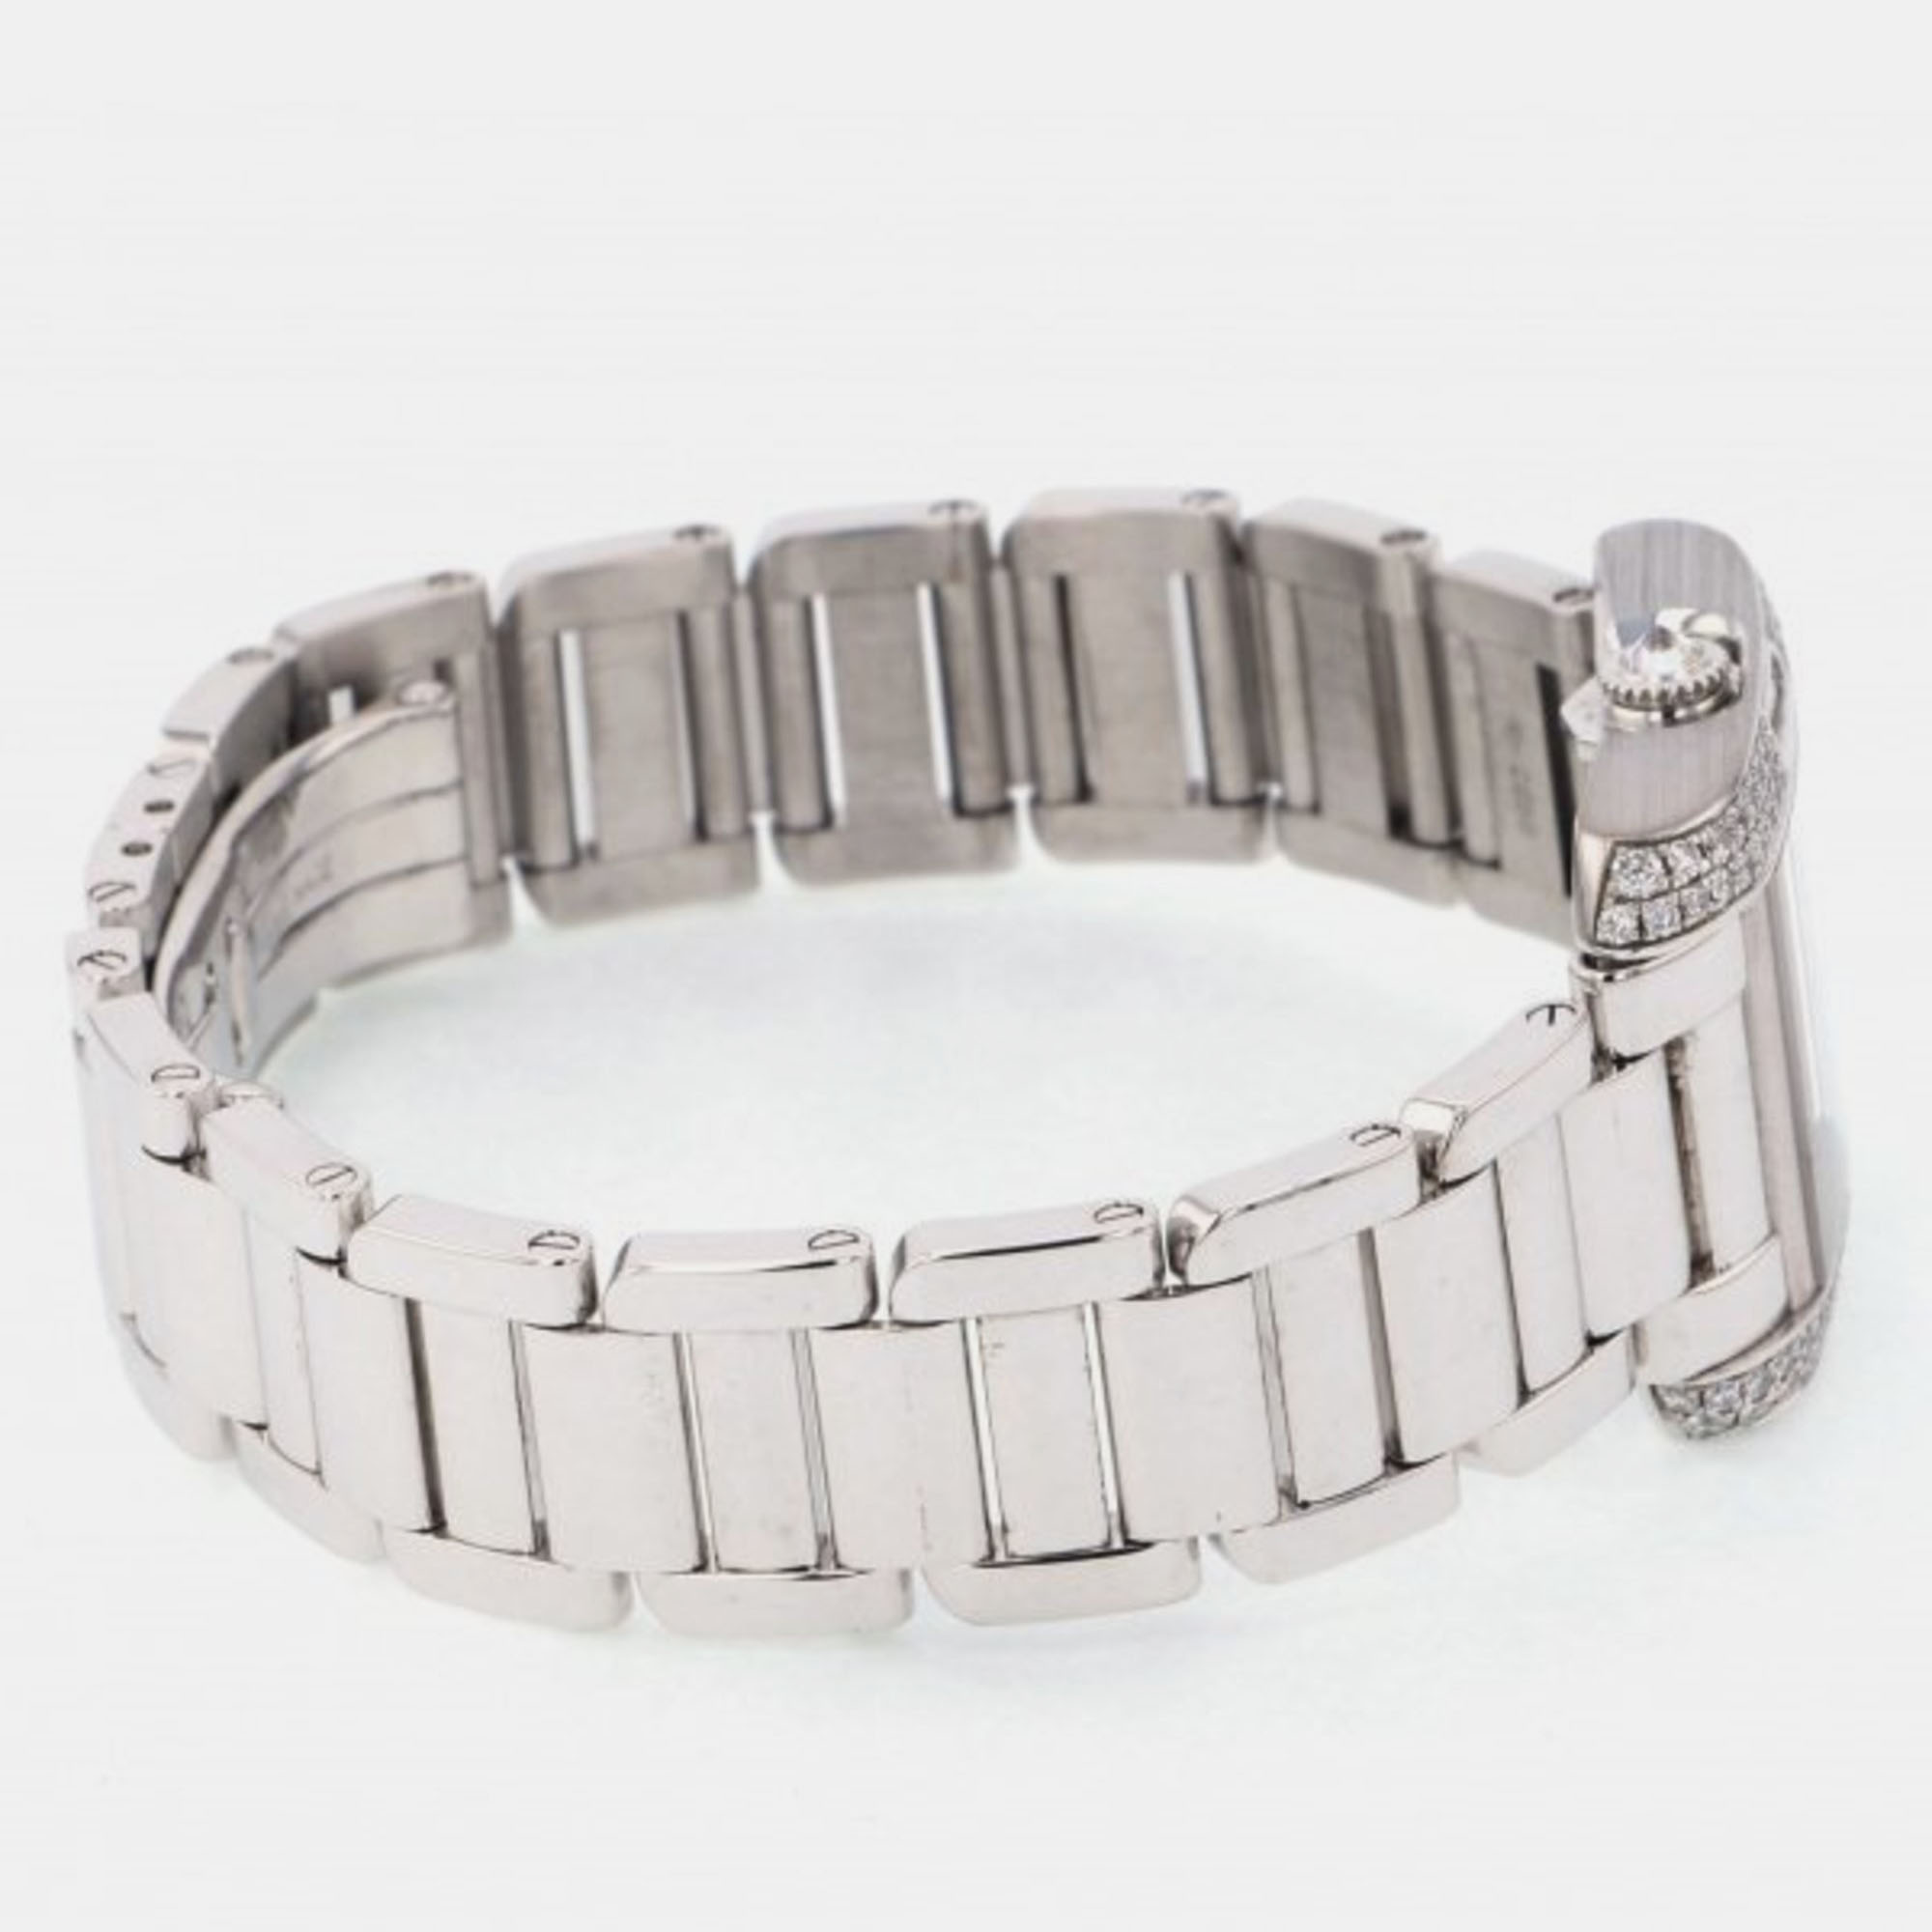 Cartier Silver Diamond 18k White Gold Tank Anglaise WT100008 Quartz Women's Wristwatch 23 Mm